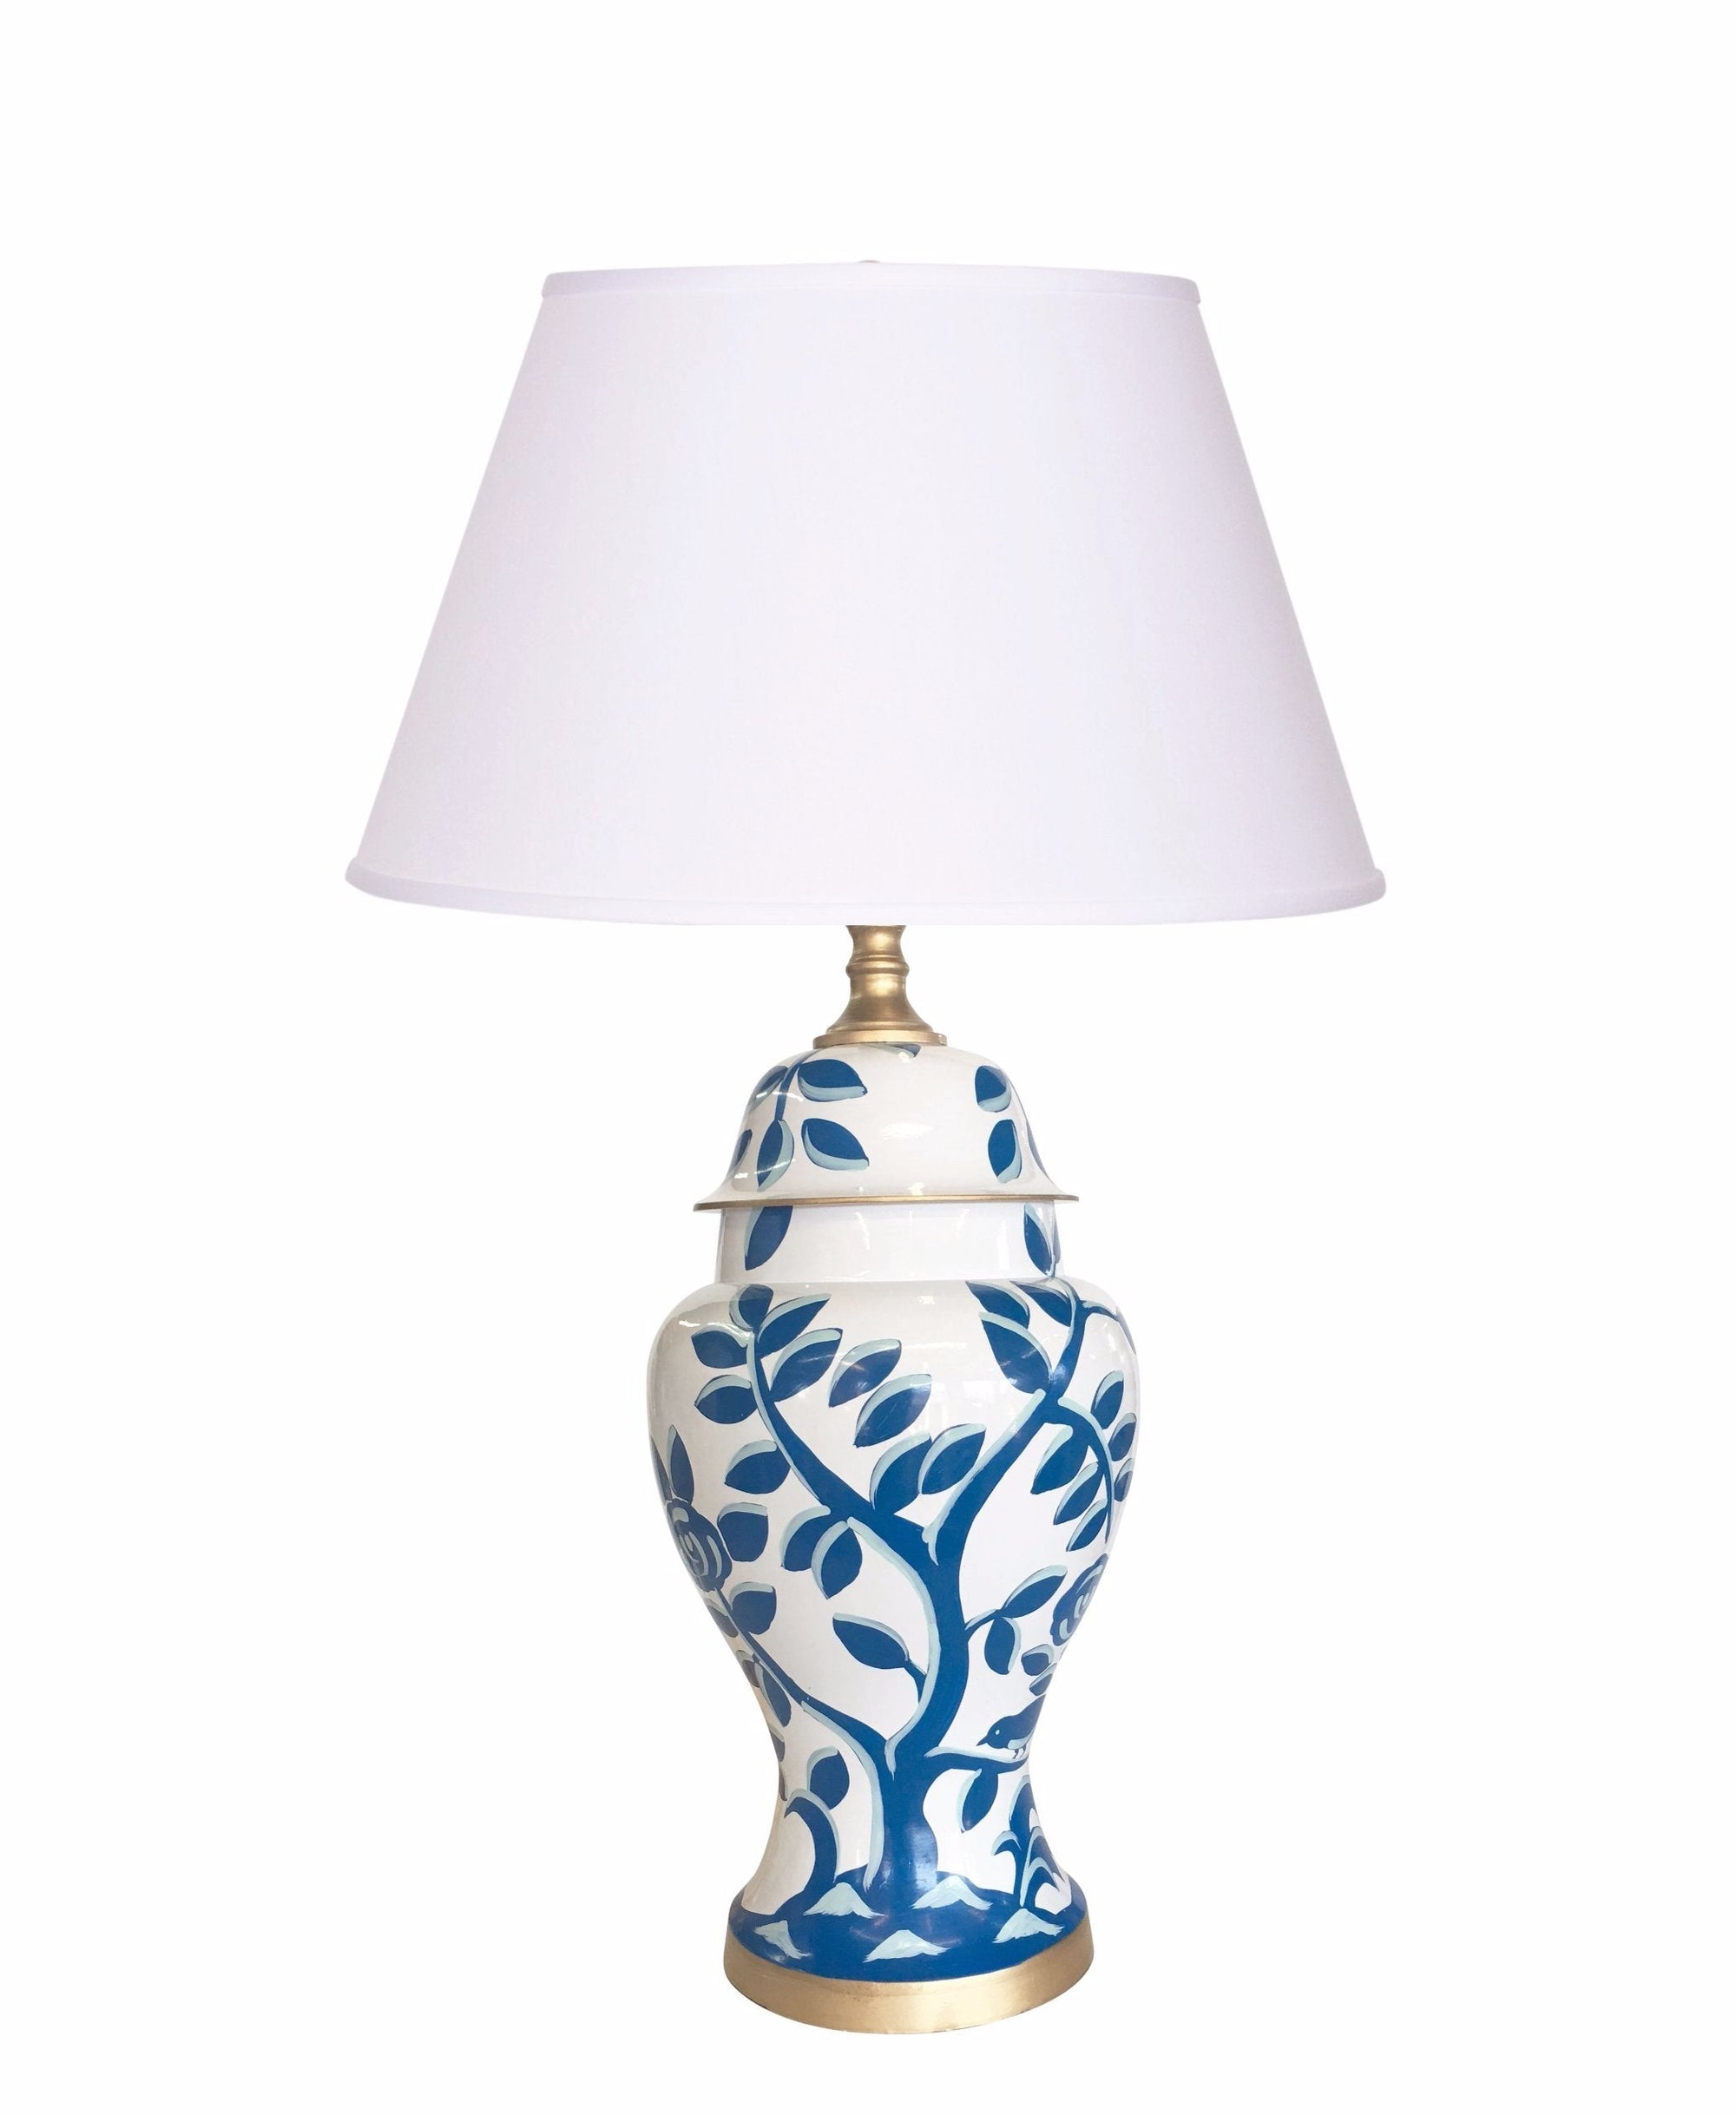 Dana Gibson Cliveden Blue Lamp, 2ndQ